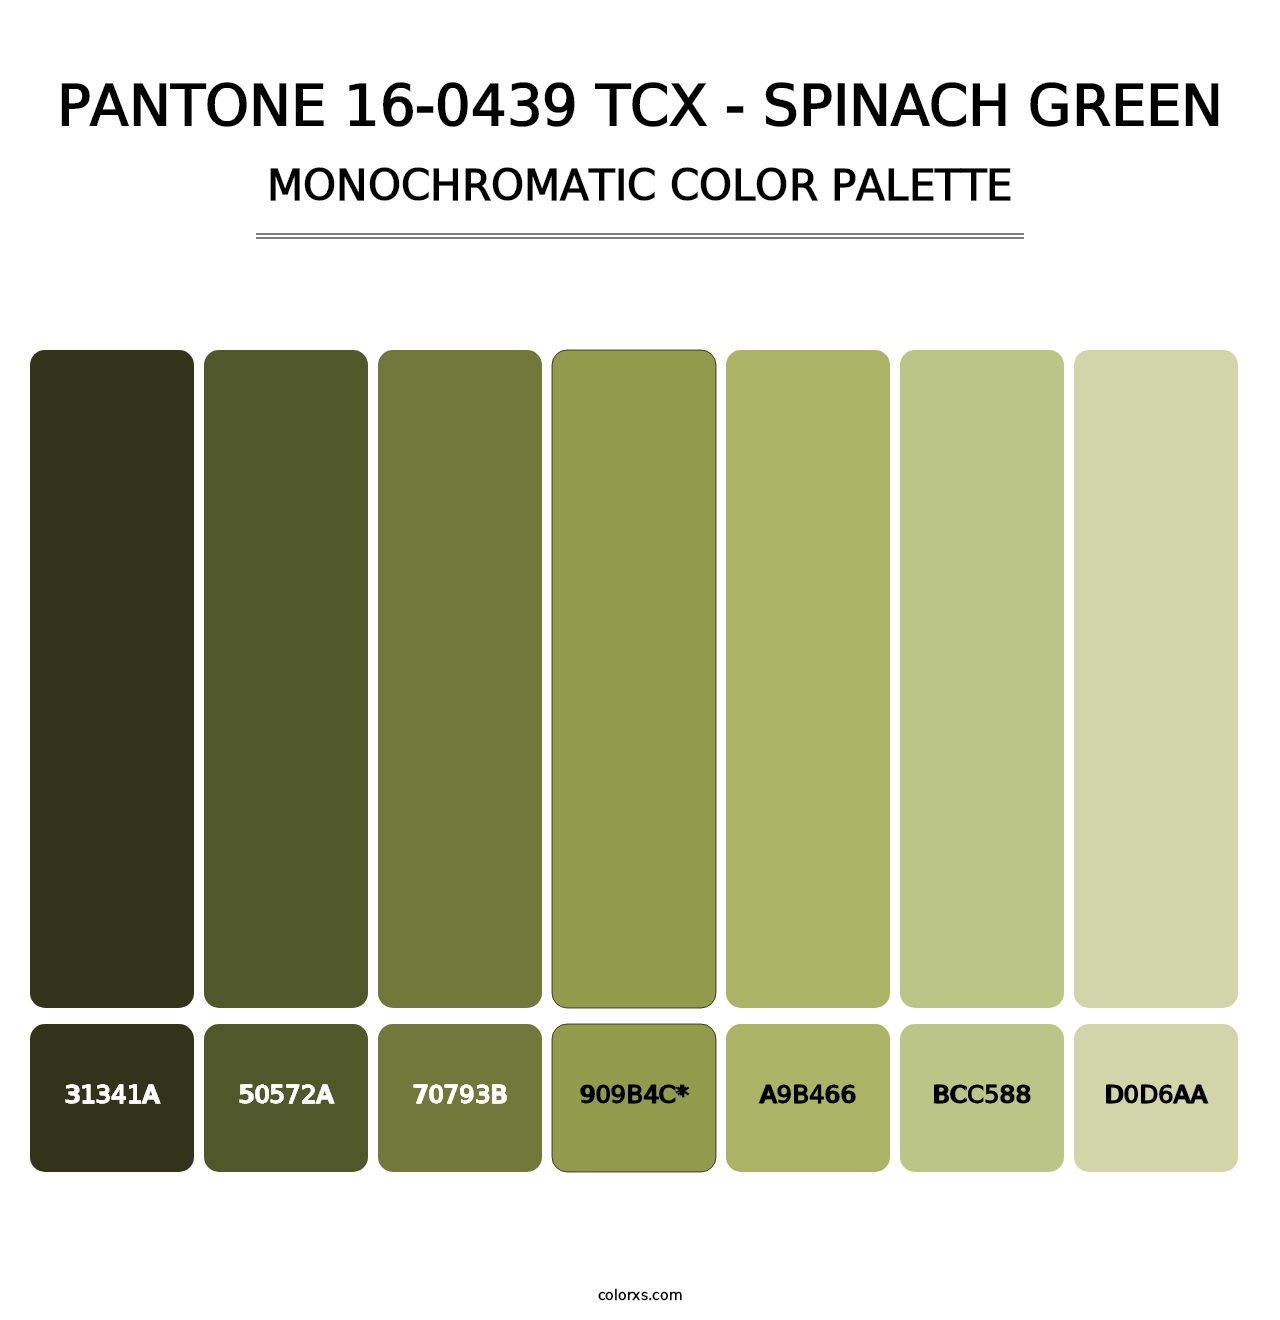 PANTONE 16-0439 TCX - Spinach Green - Monochromatic Color Palette